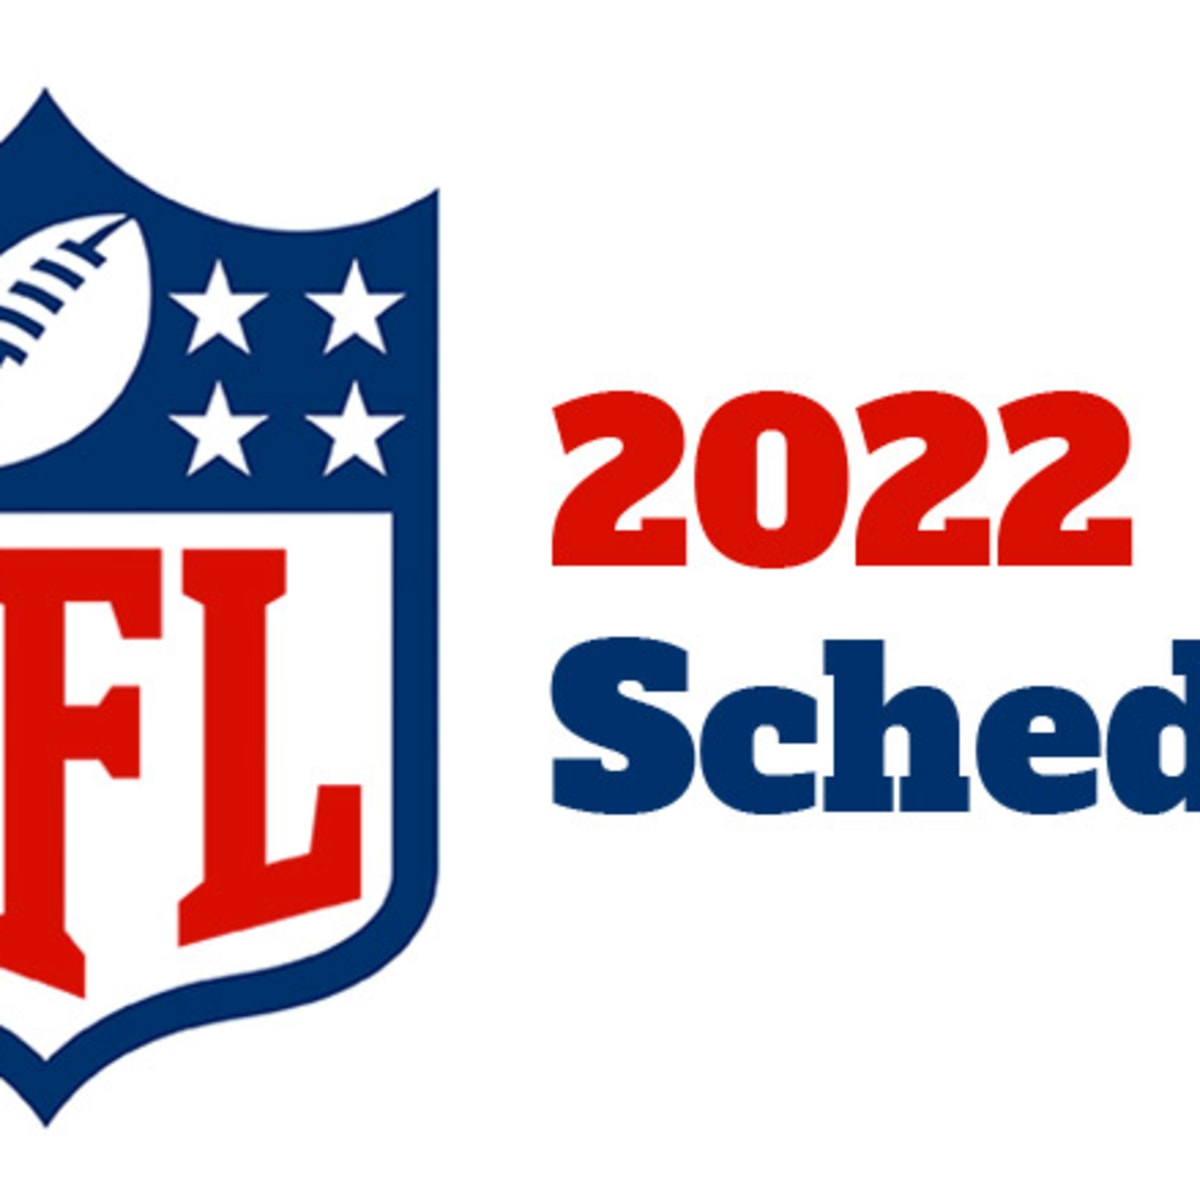 nfl 2022 schedule week 5